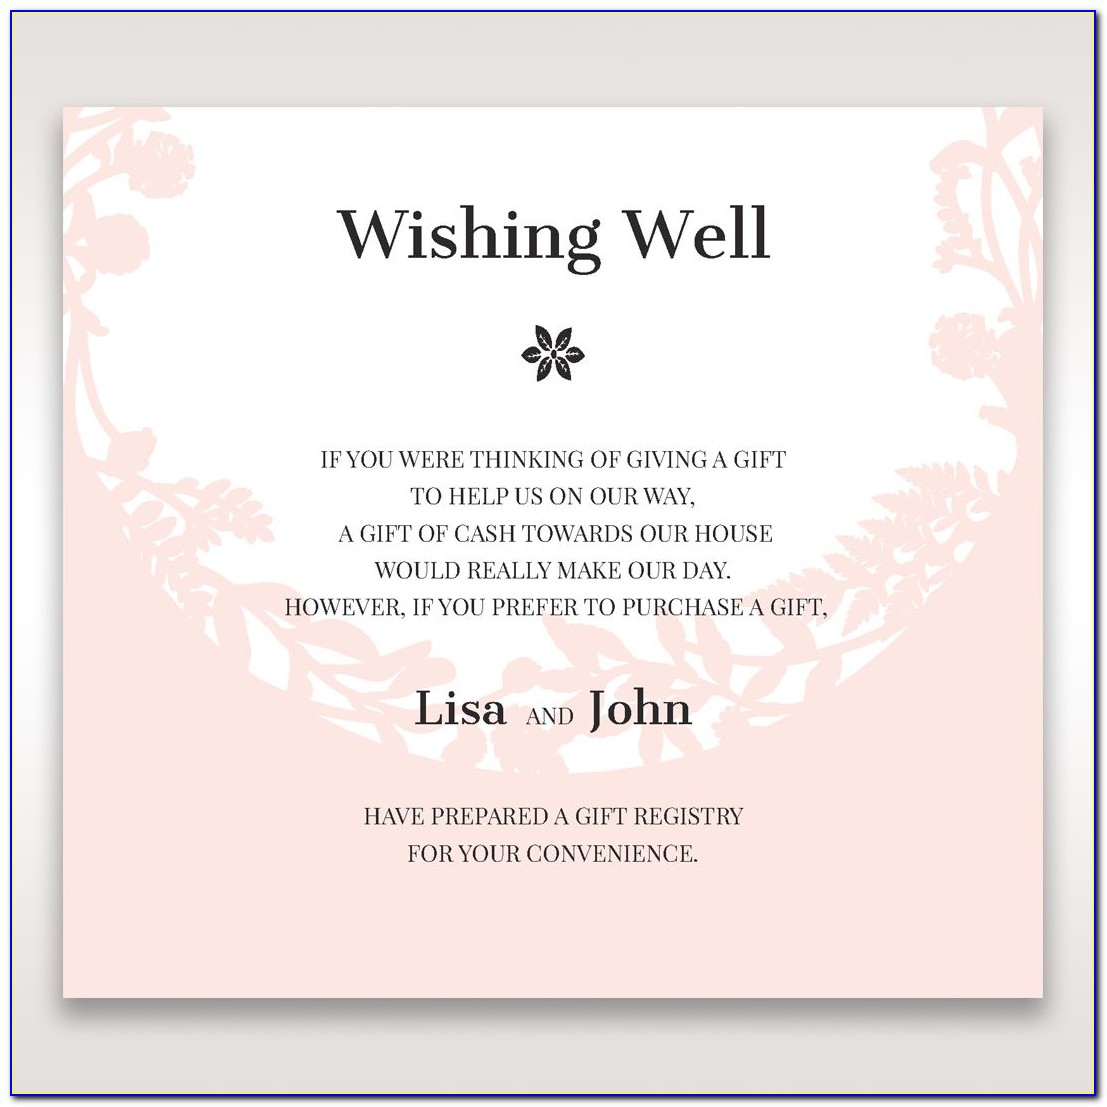 Wedding Invite Wishing Well Wording